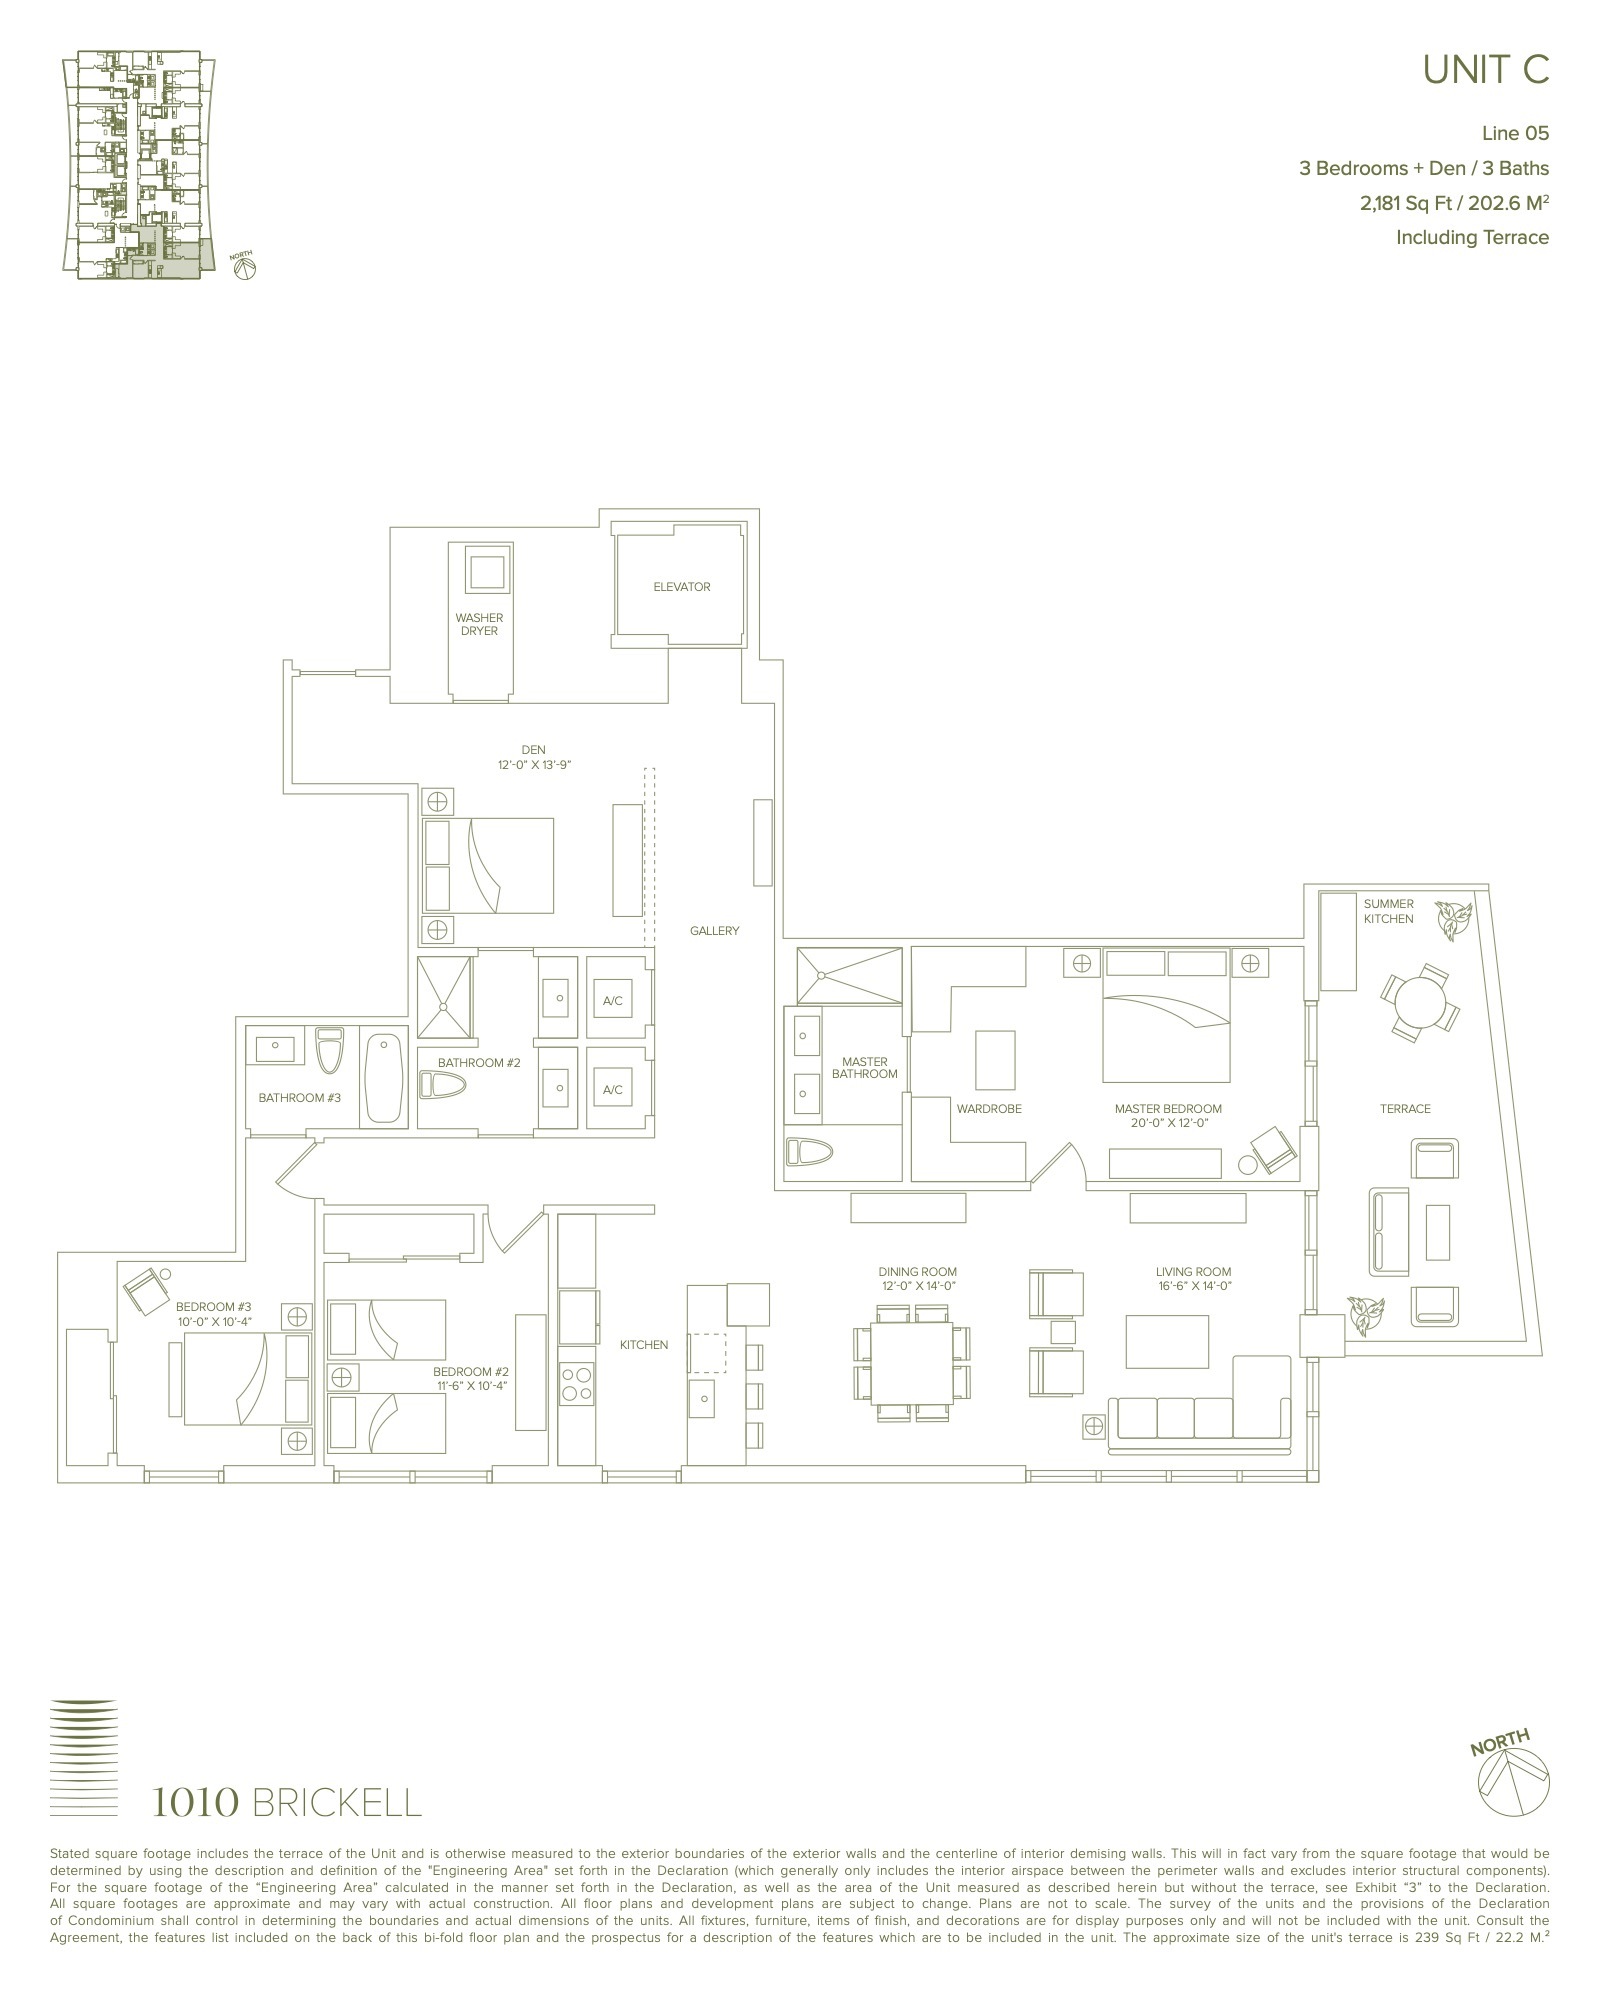 Floor Plan for 1010 Brickell Floorplans, Unit C